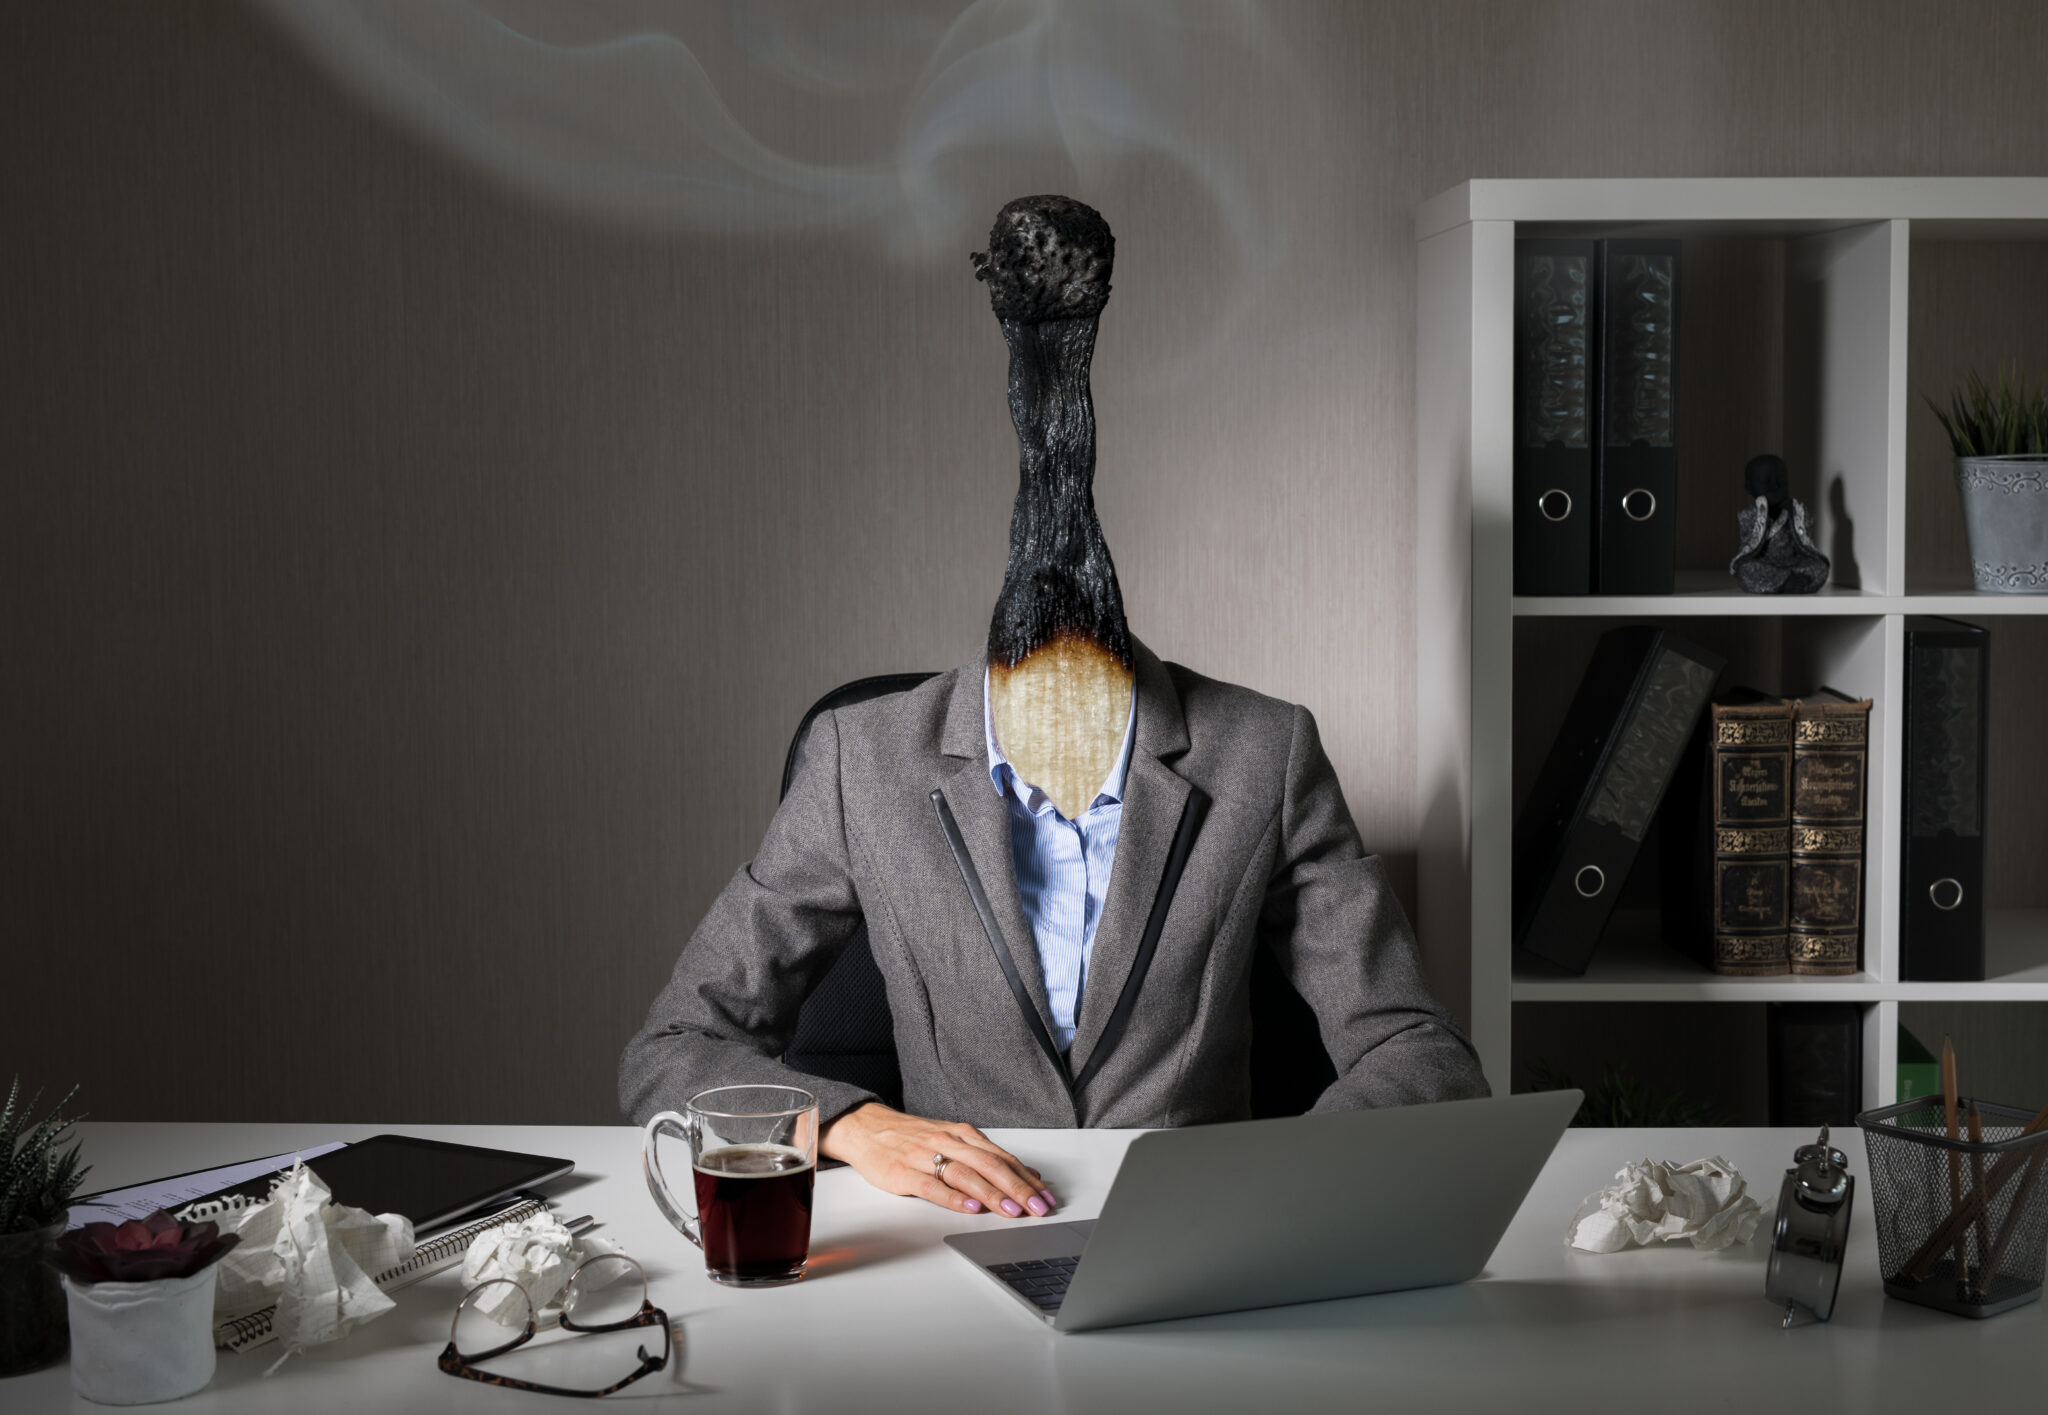 Employee burnout scaled